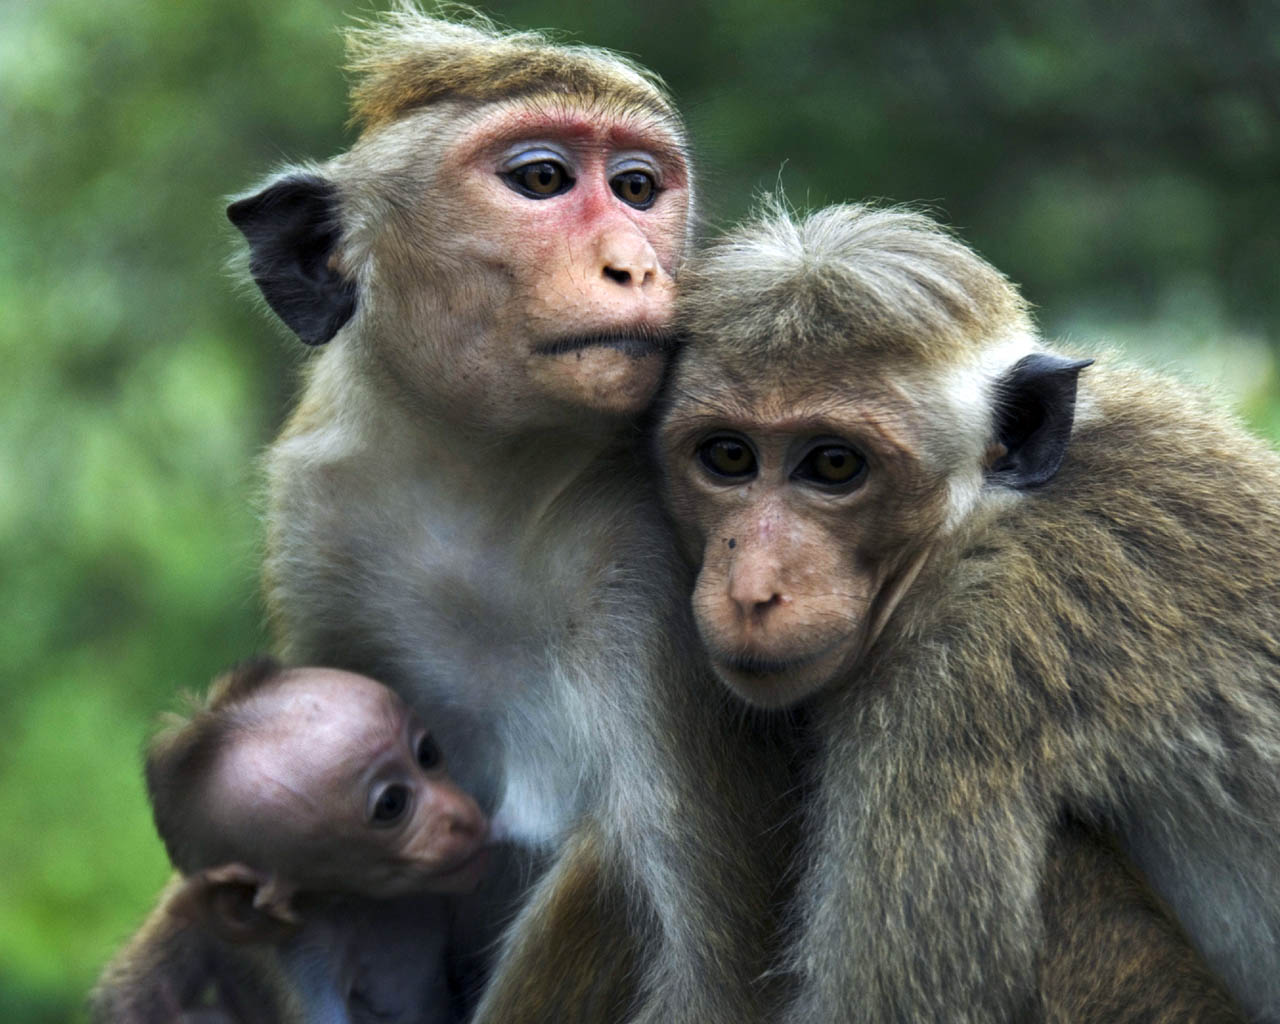 Funny Pictures Gallery: Monkey, monkeys, crazy monkey , monkey picture